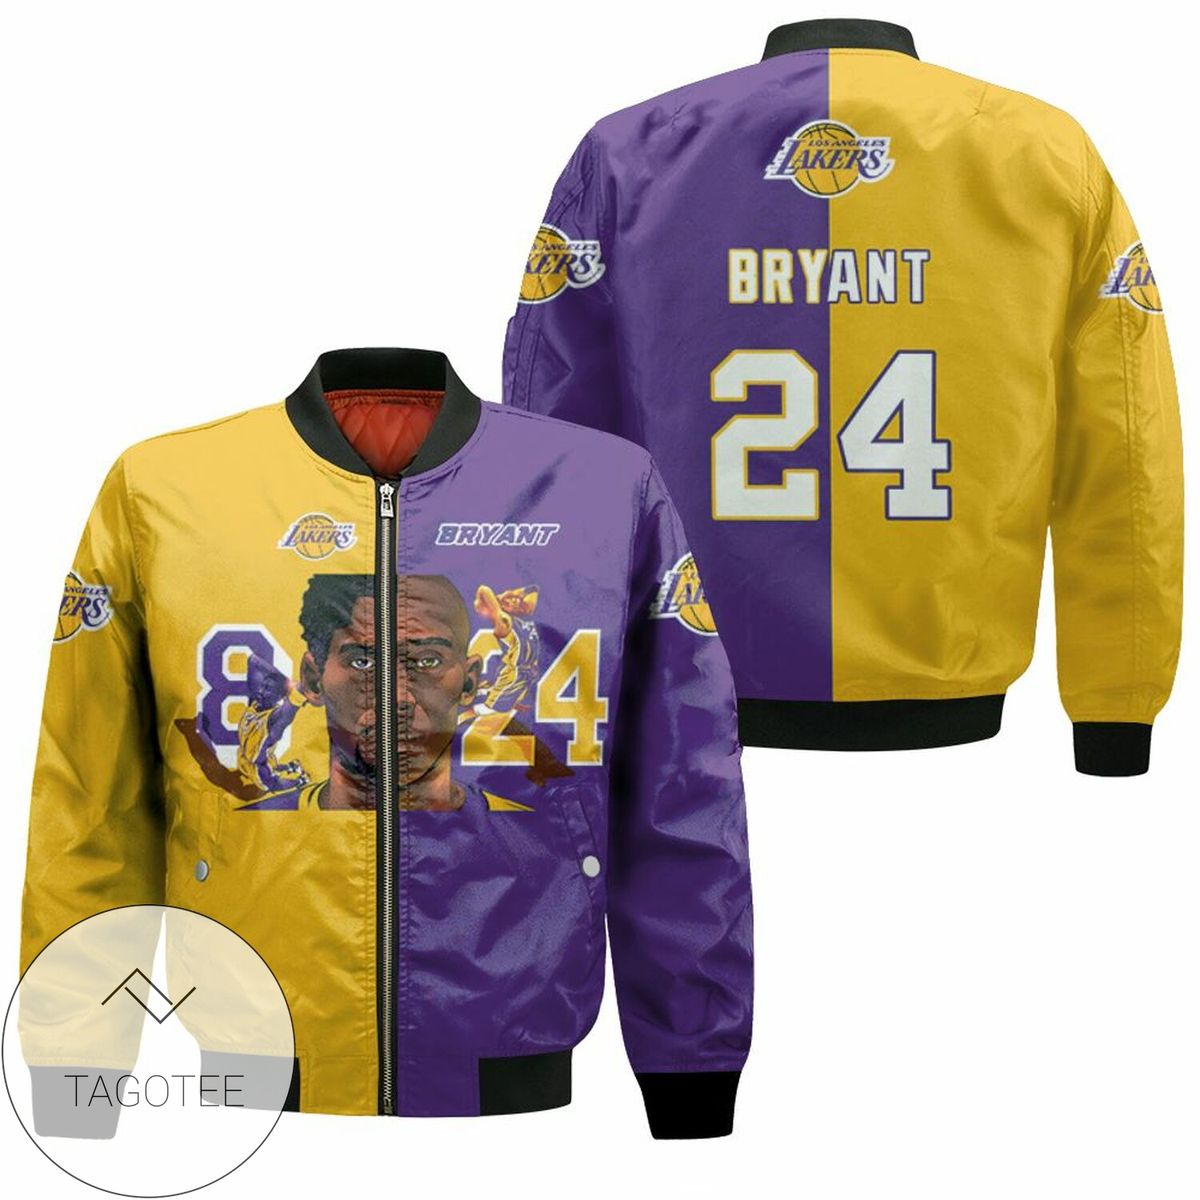 Kobe Bryant 8 24 Los Angeles Lakers Bomber Jacket